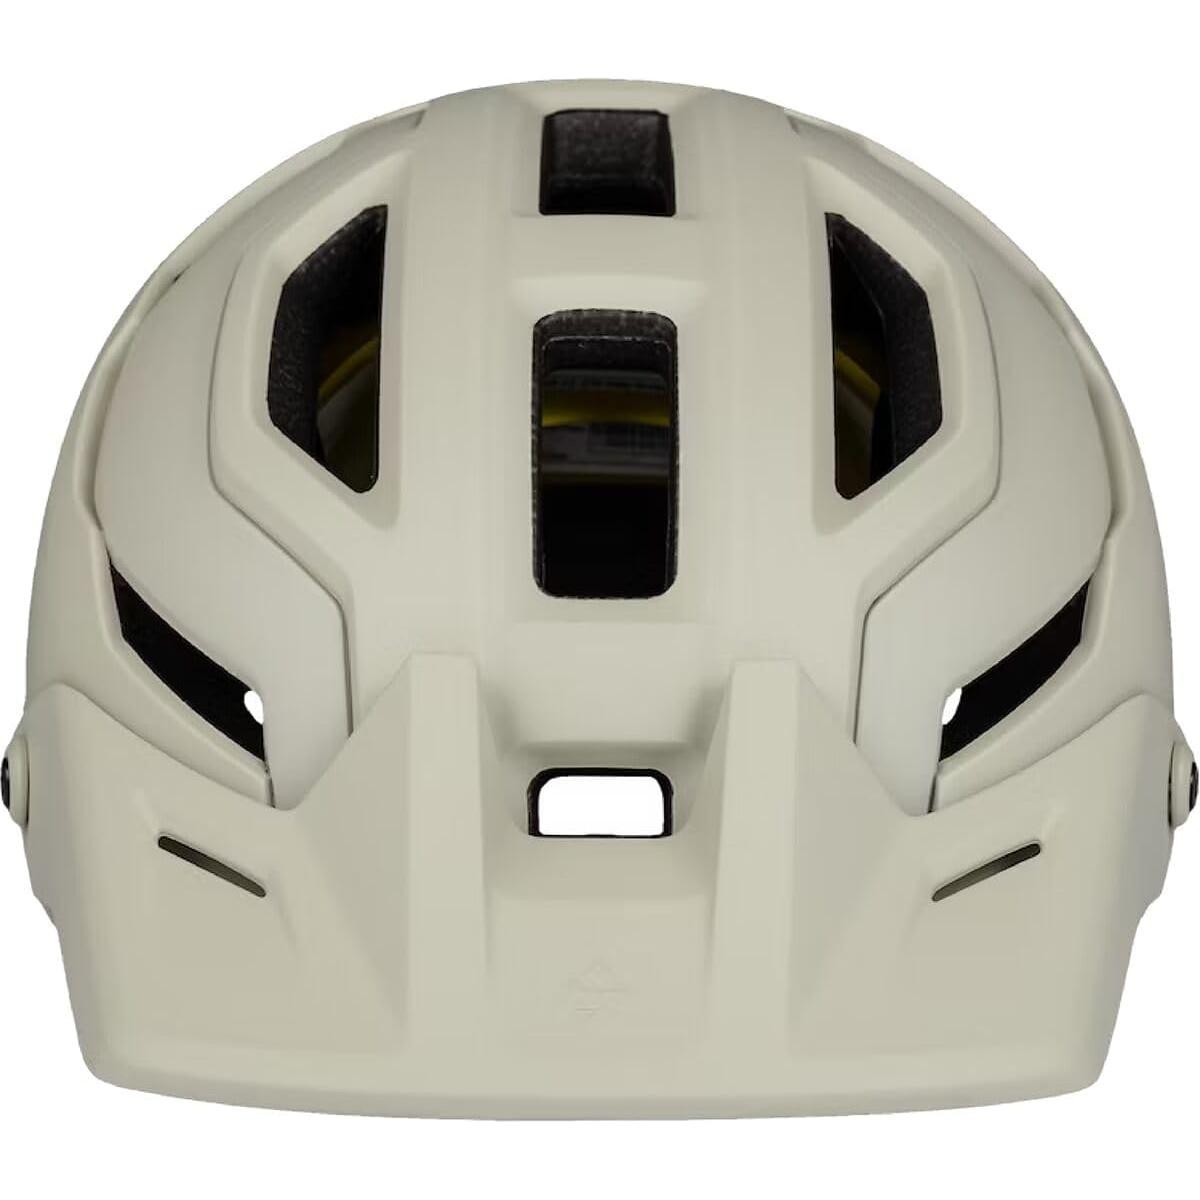 Sweet Protection Trailblazer Mips Helmet